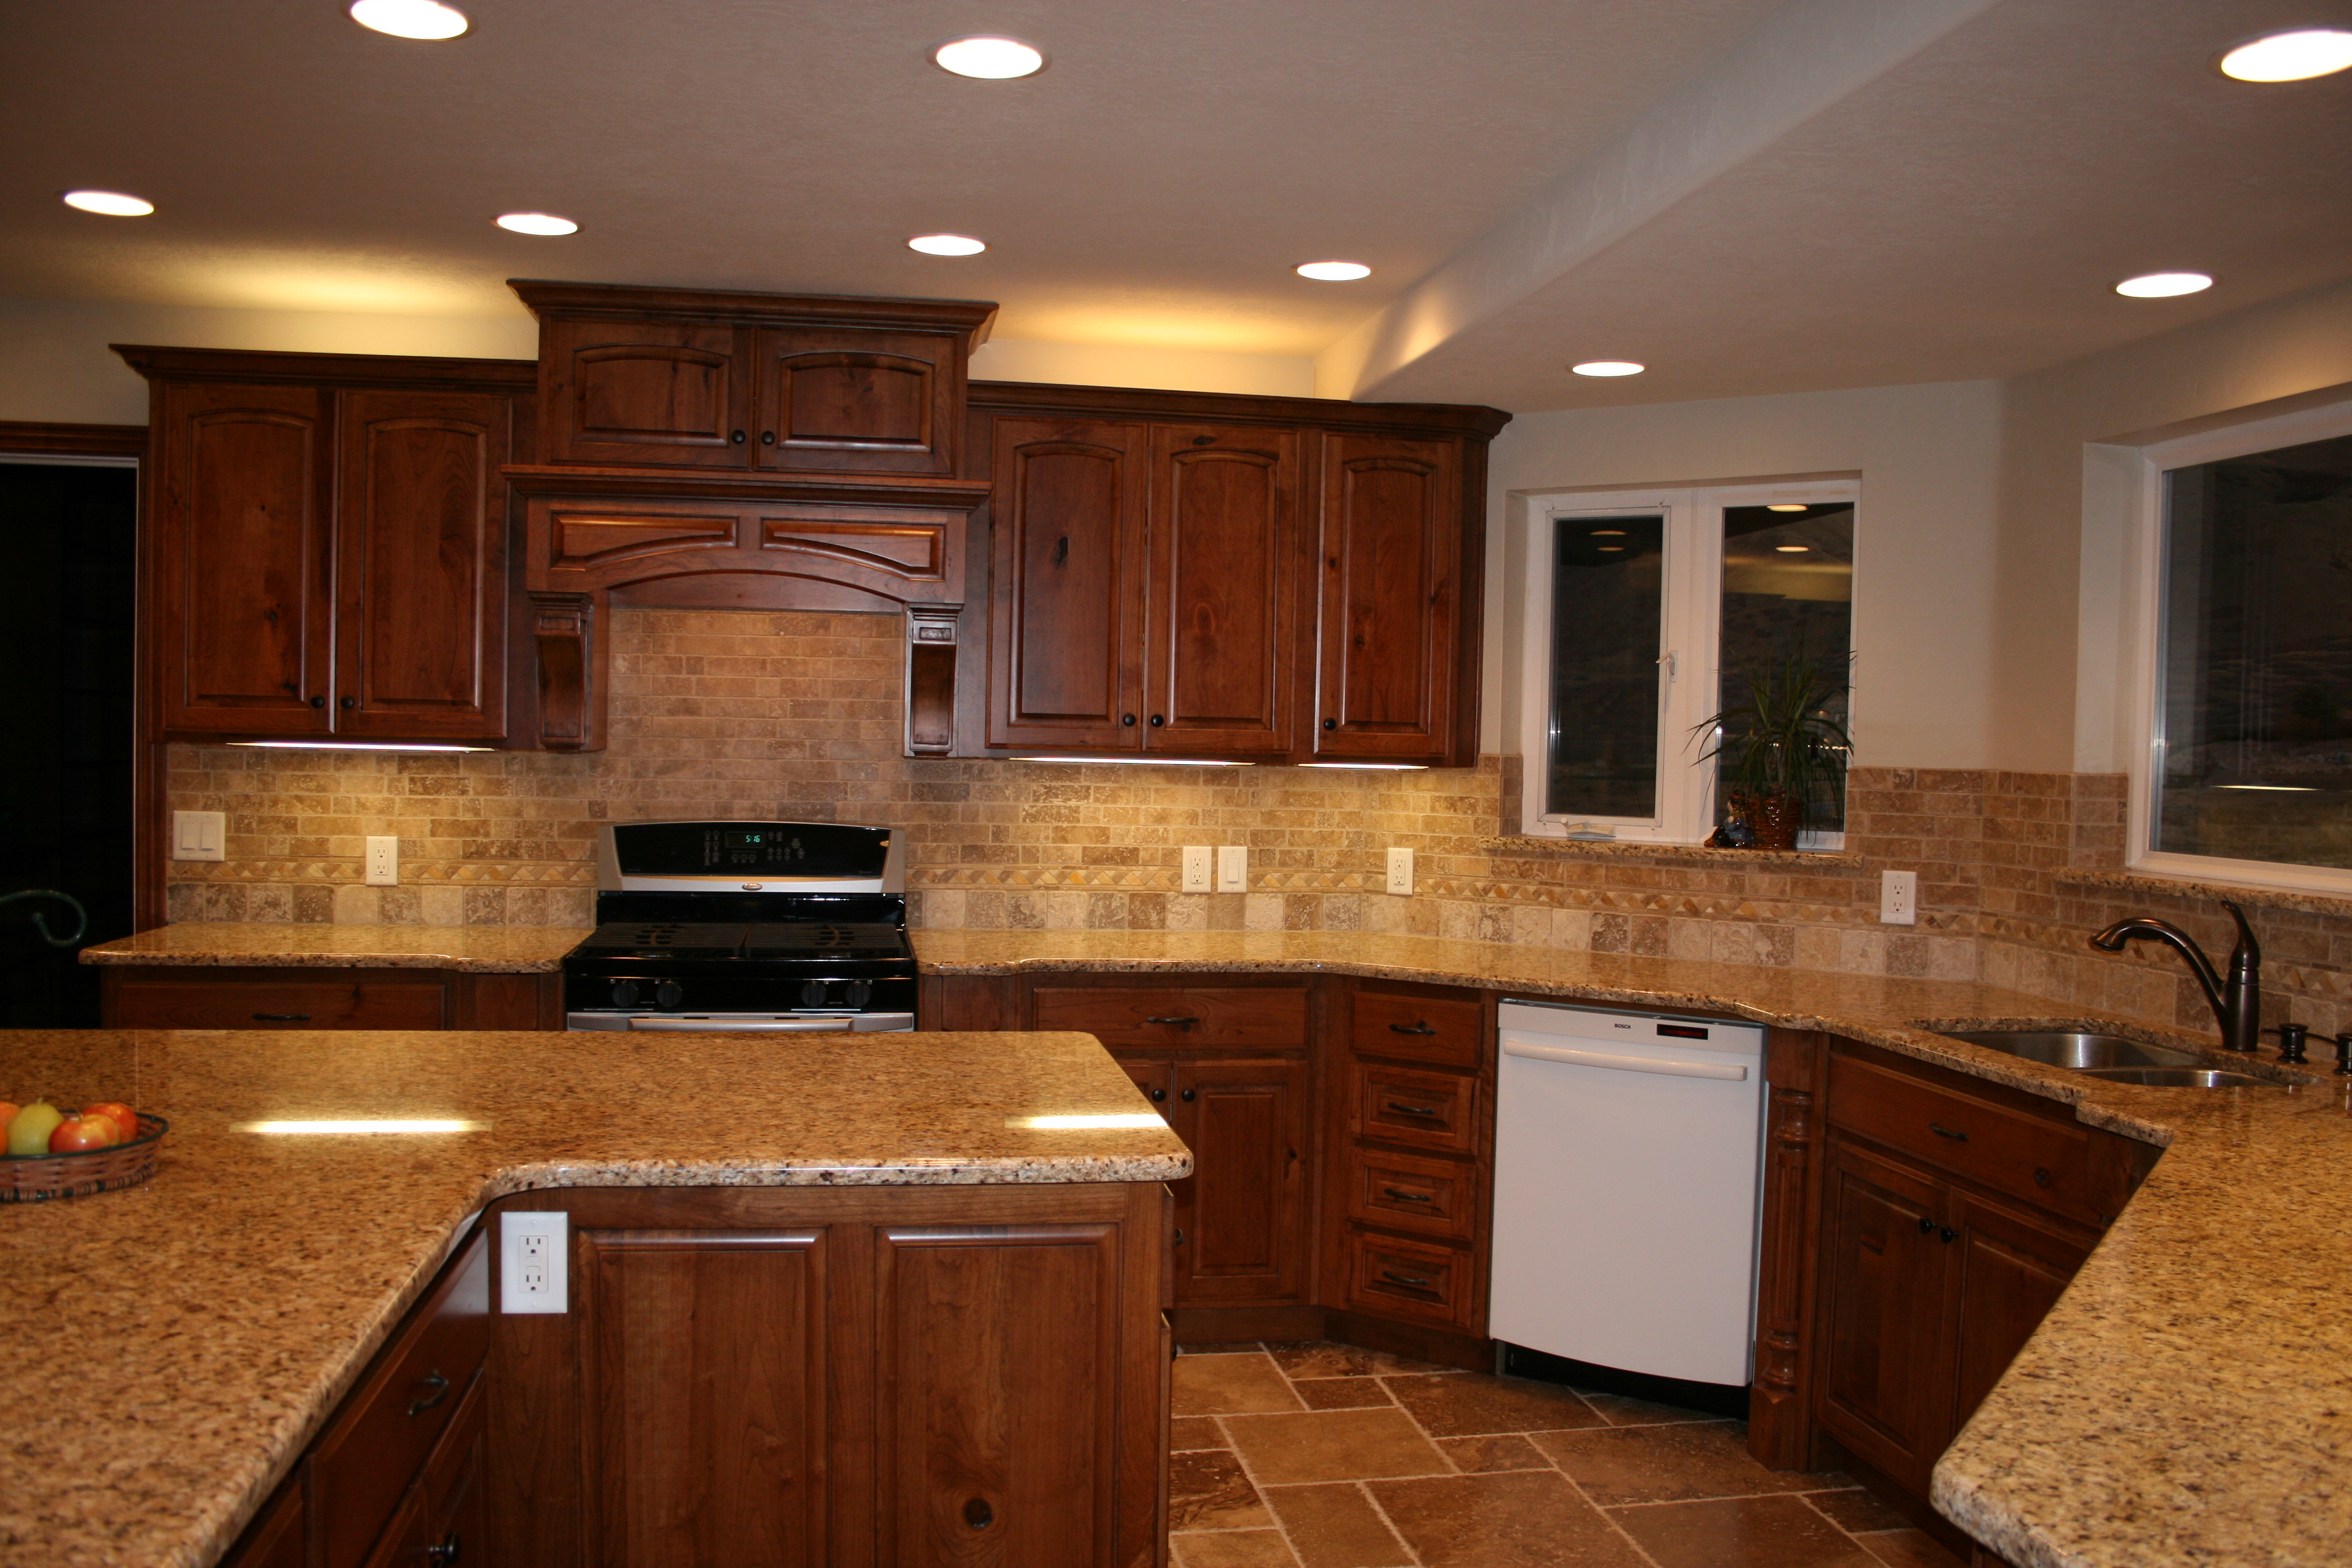 Similar Kitchen Kitchen Backsplash Photos Kitchen Cabinets And Granite Granite Countertops Maintenance